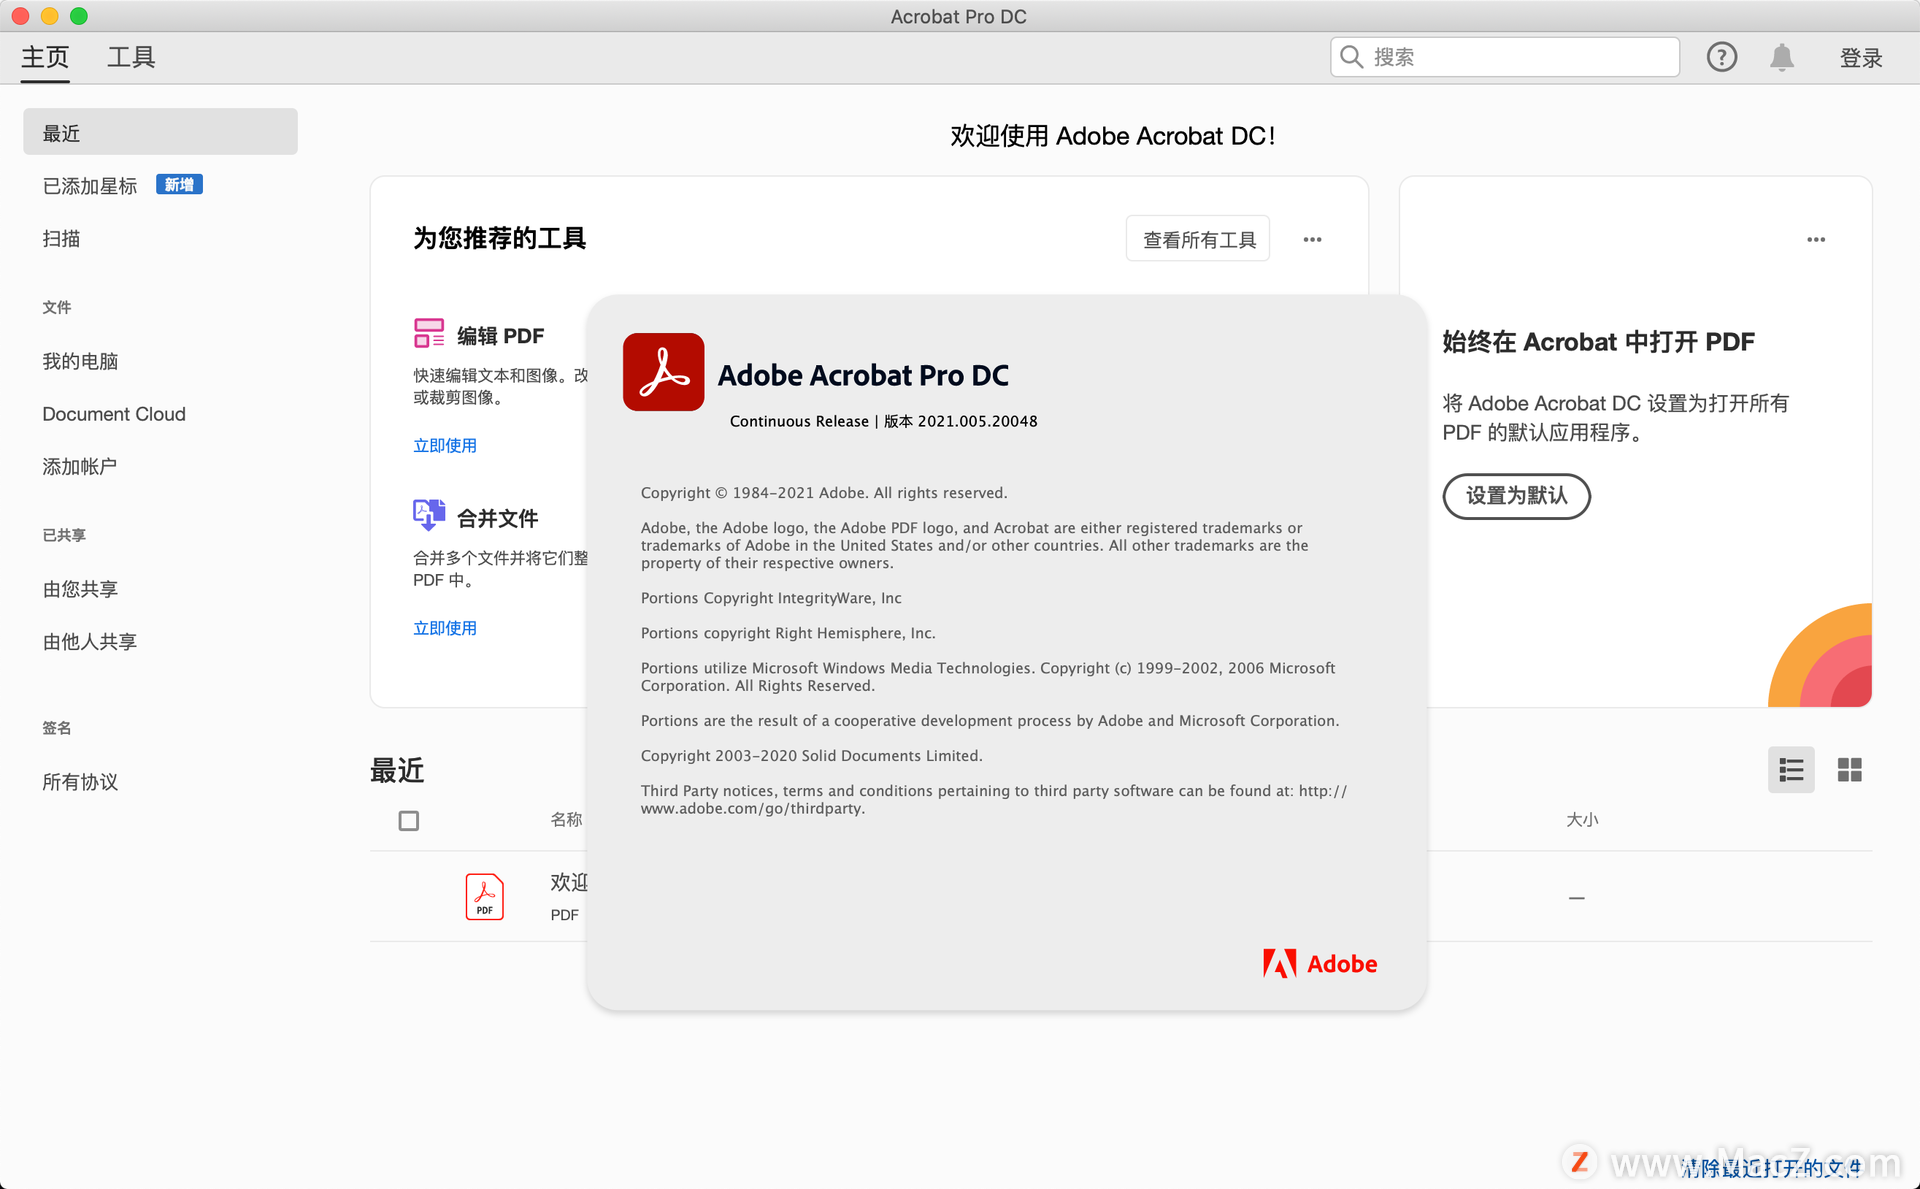 mac电脑版Acrobat Pro DC 2021 安装  Acrobat Pro DC 2021 中文安装教程